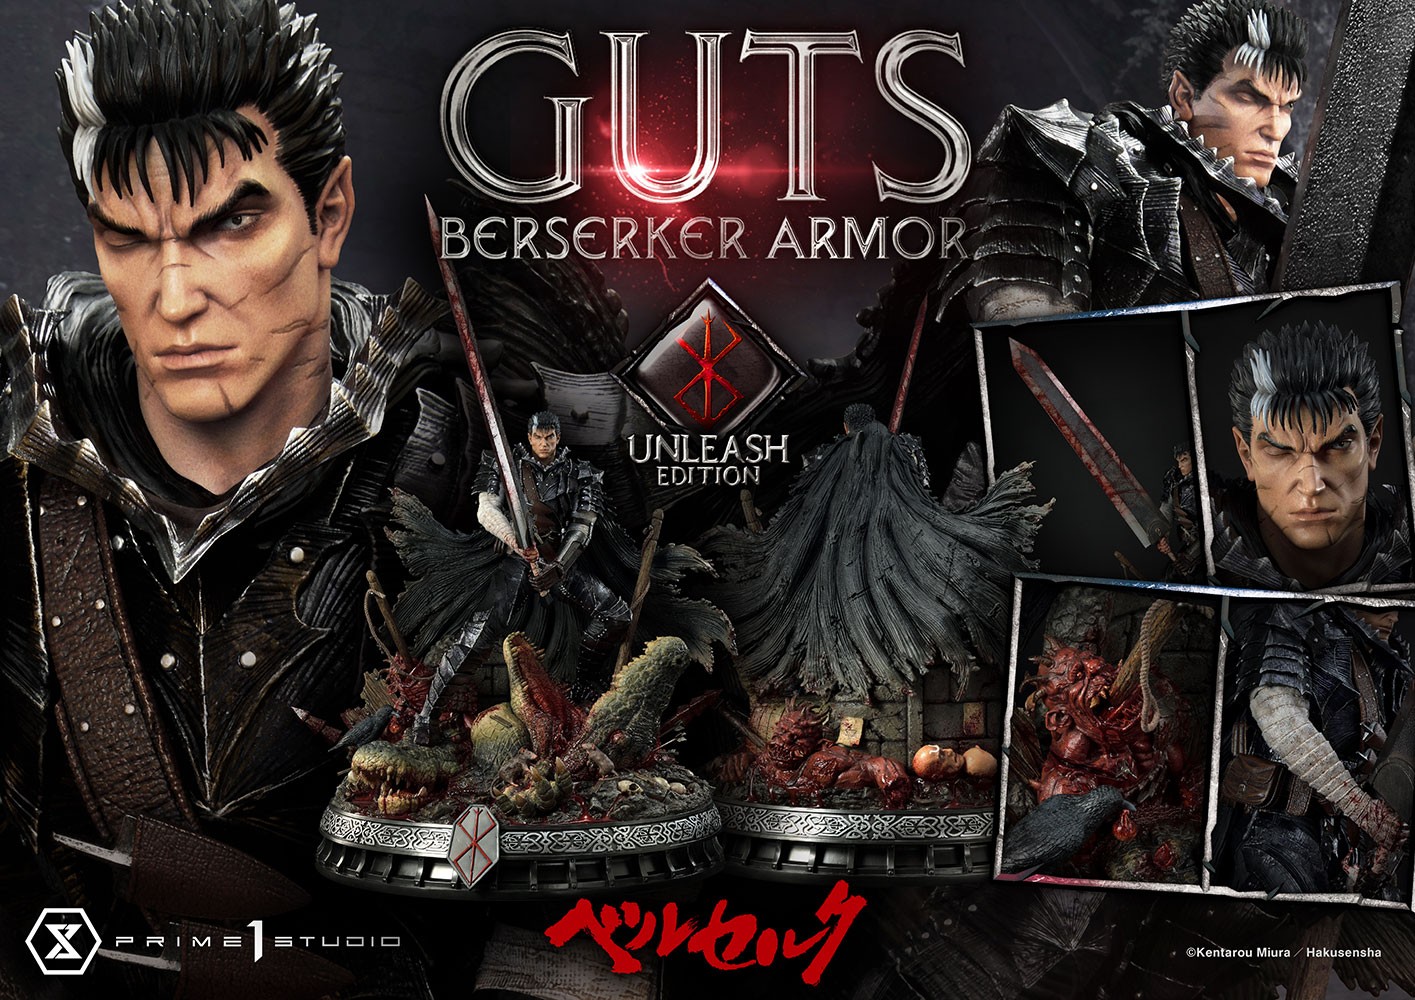 Guts Berserker Armor (Unleash Edition) Collector Edition (Prototype Shown) View 19